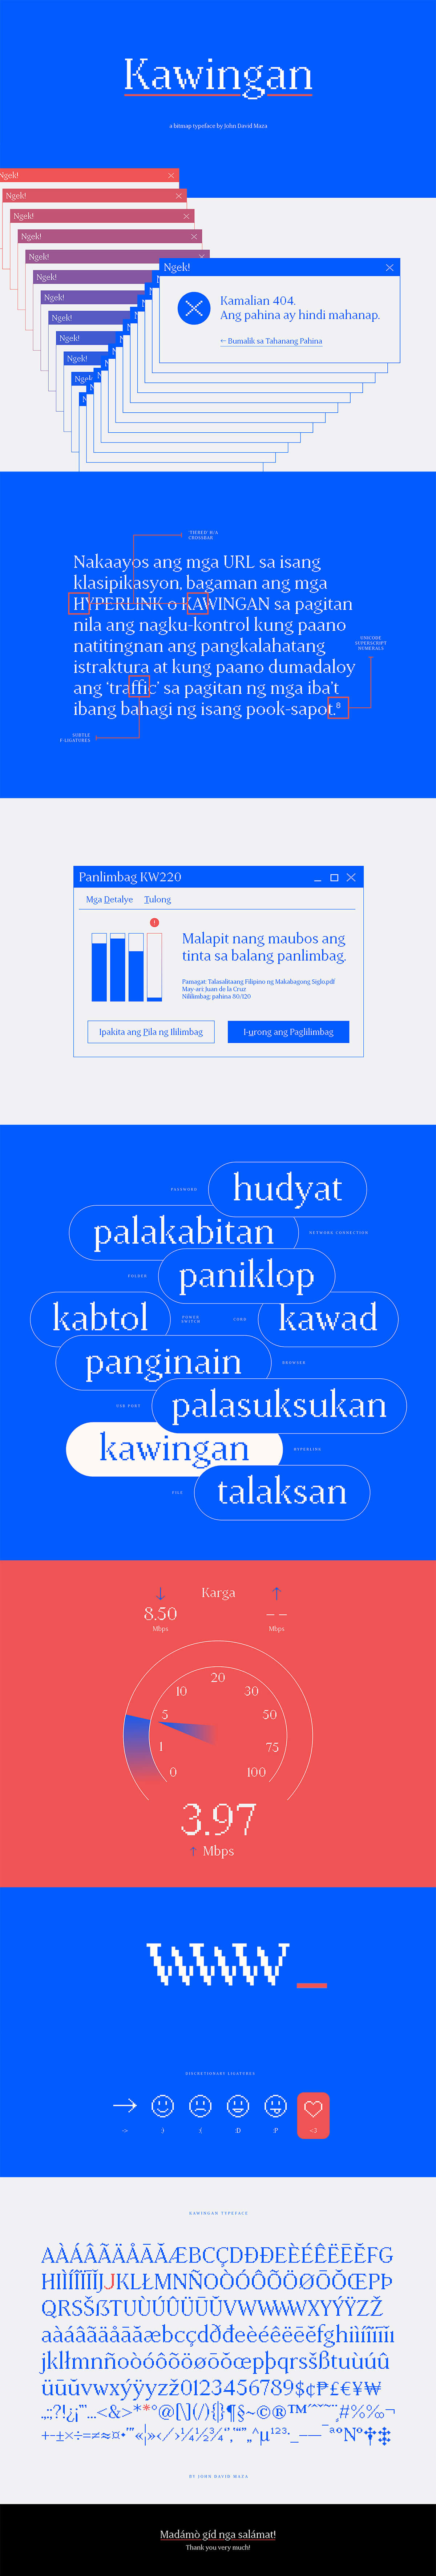 Free Kawingan Serif Font